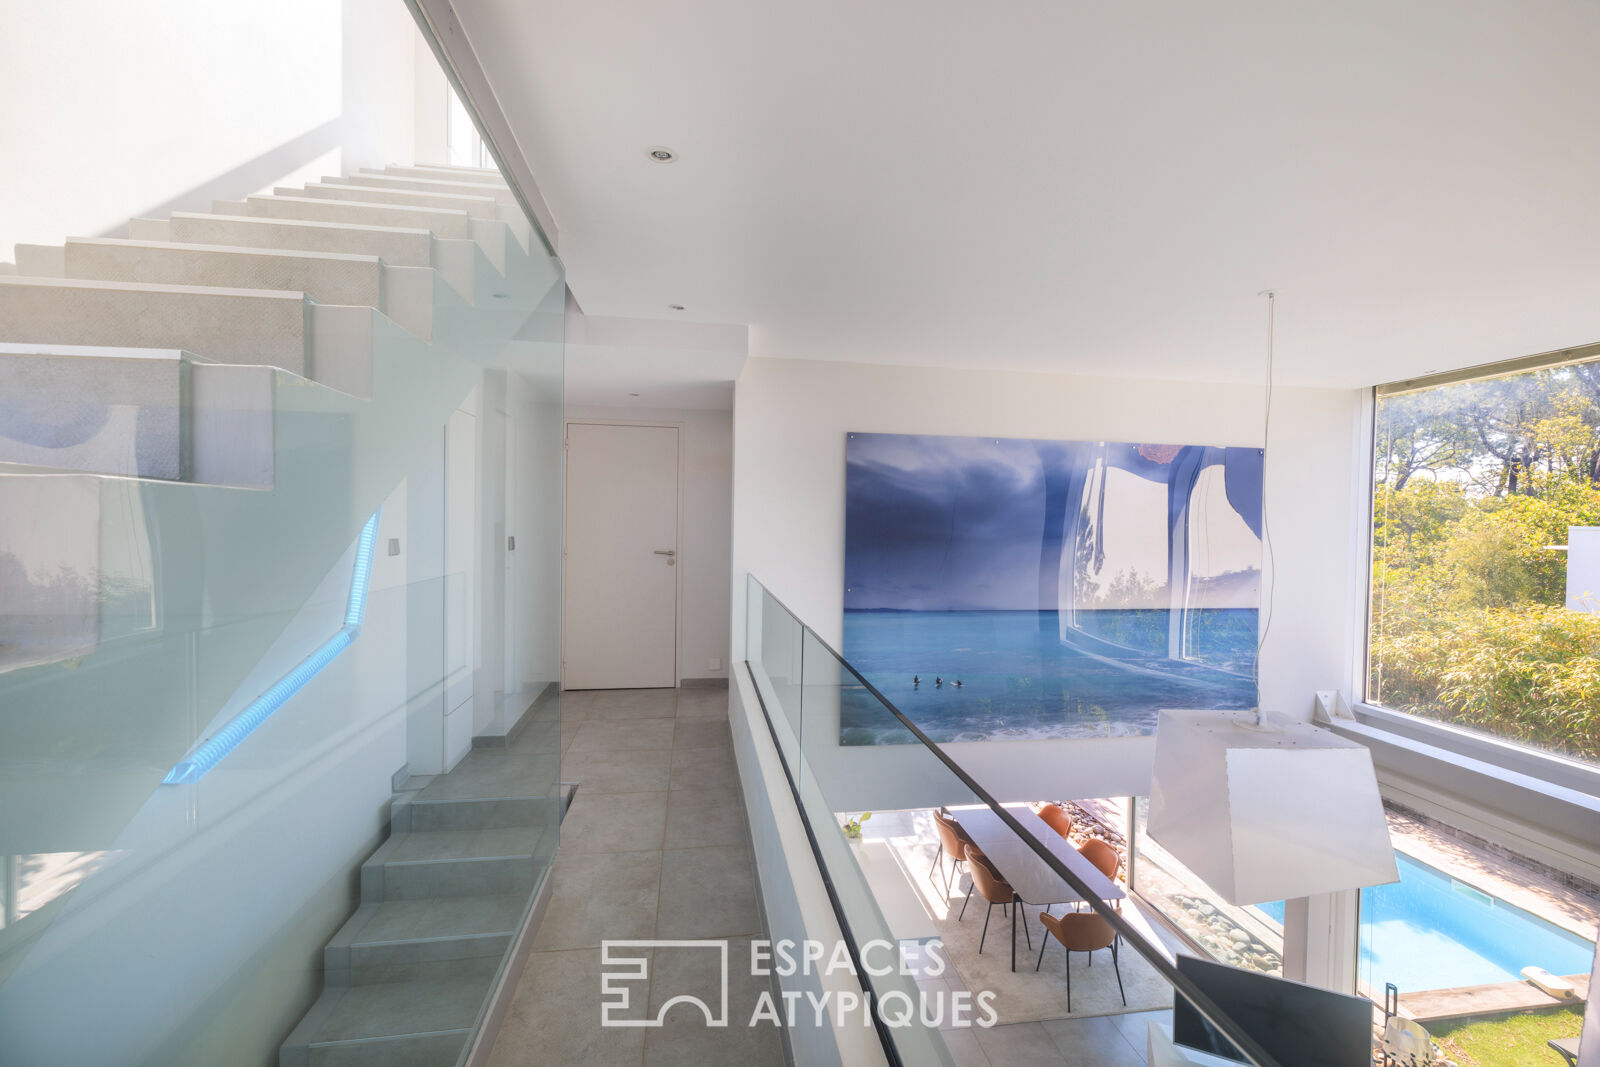 The elegant architect-designed villa with ocean views